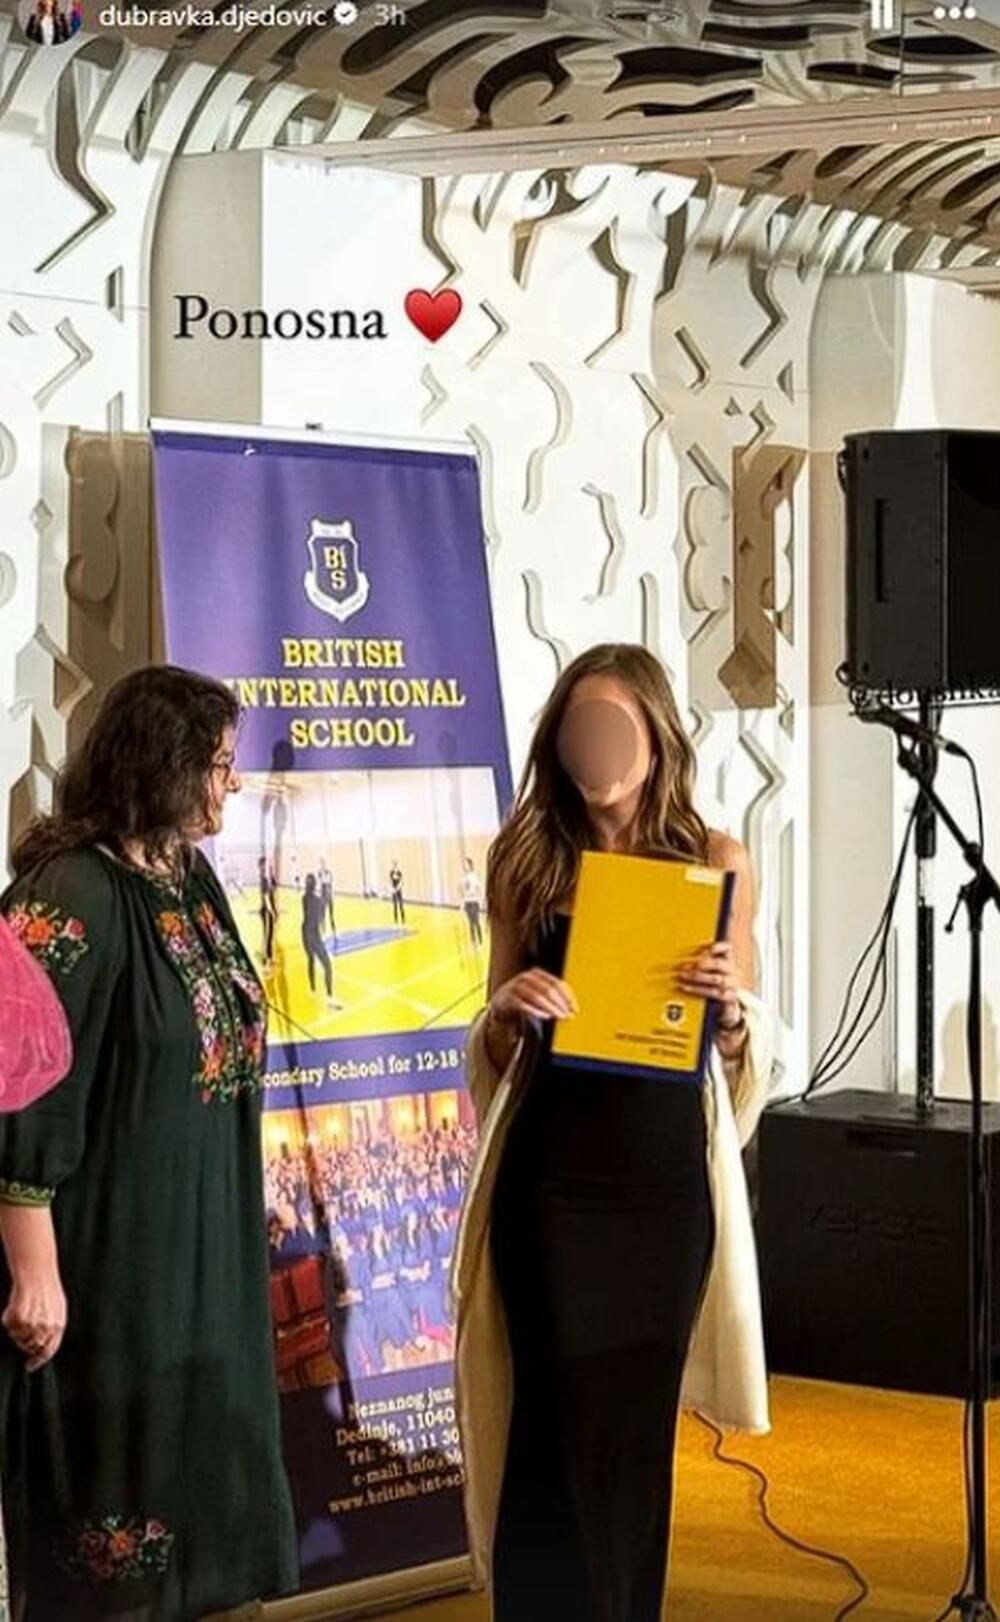 Ministarka Dubravka Đedović pohvalila se uspehom svoje ćerke